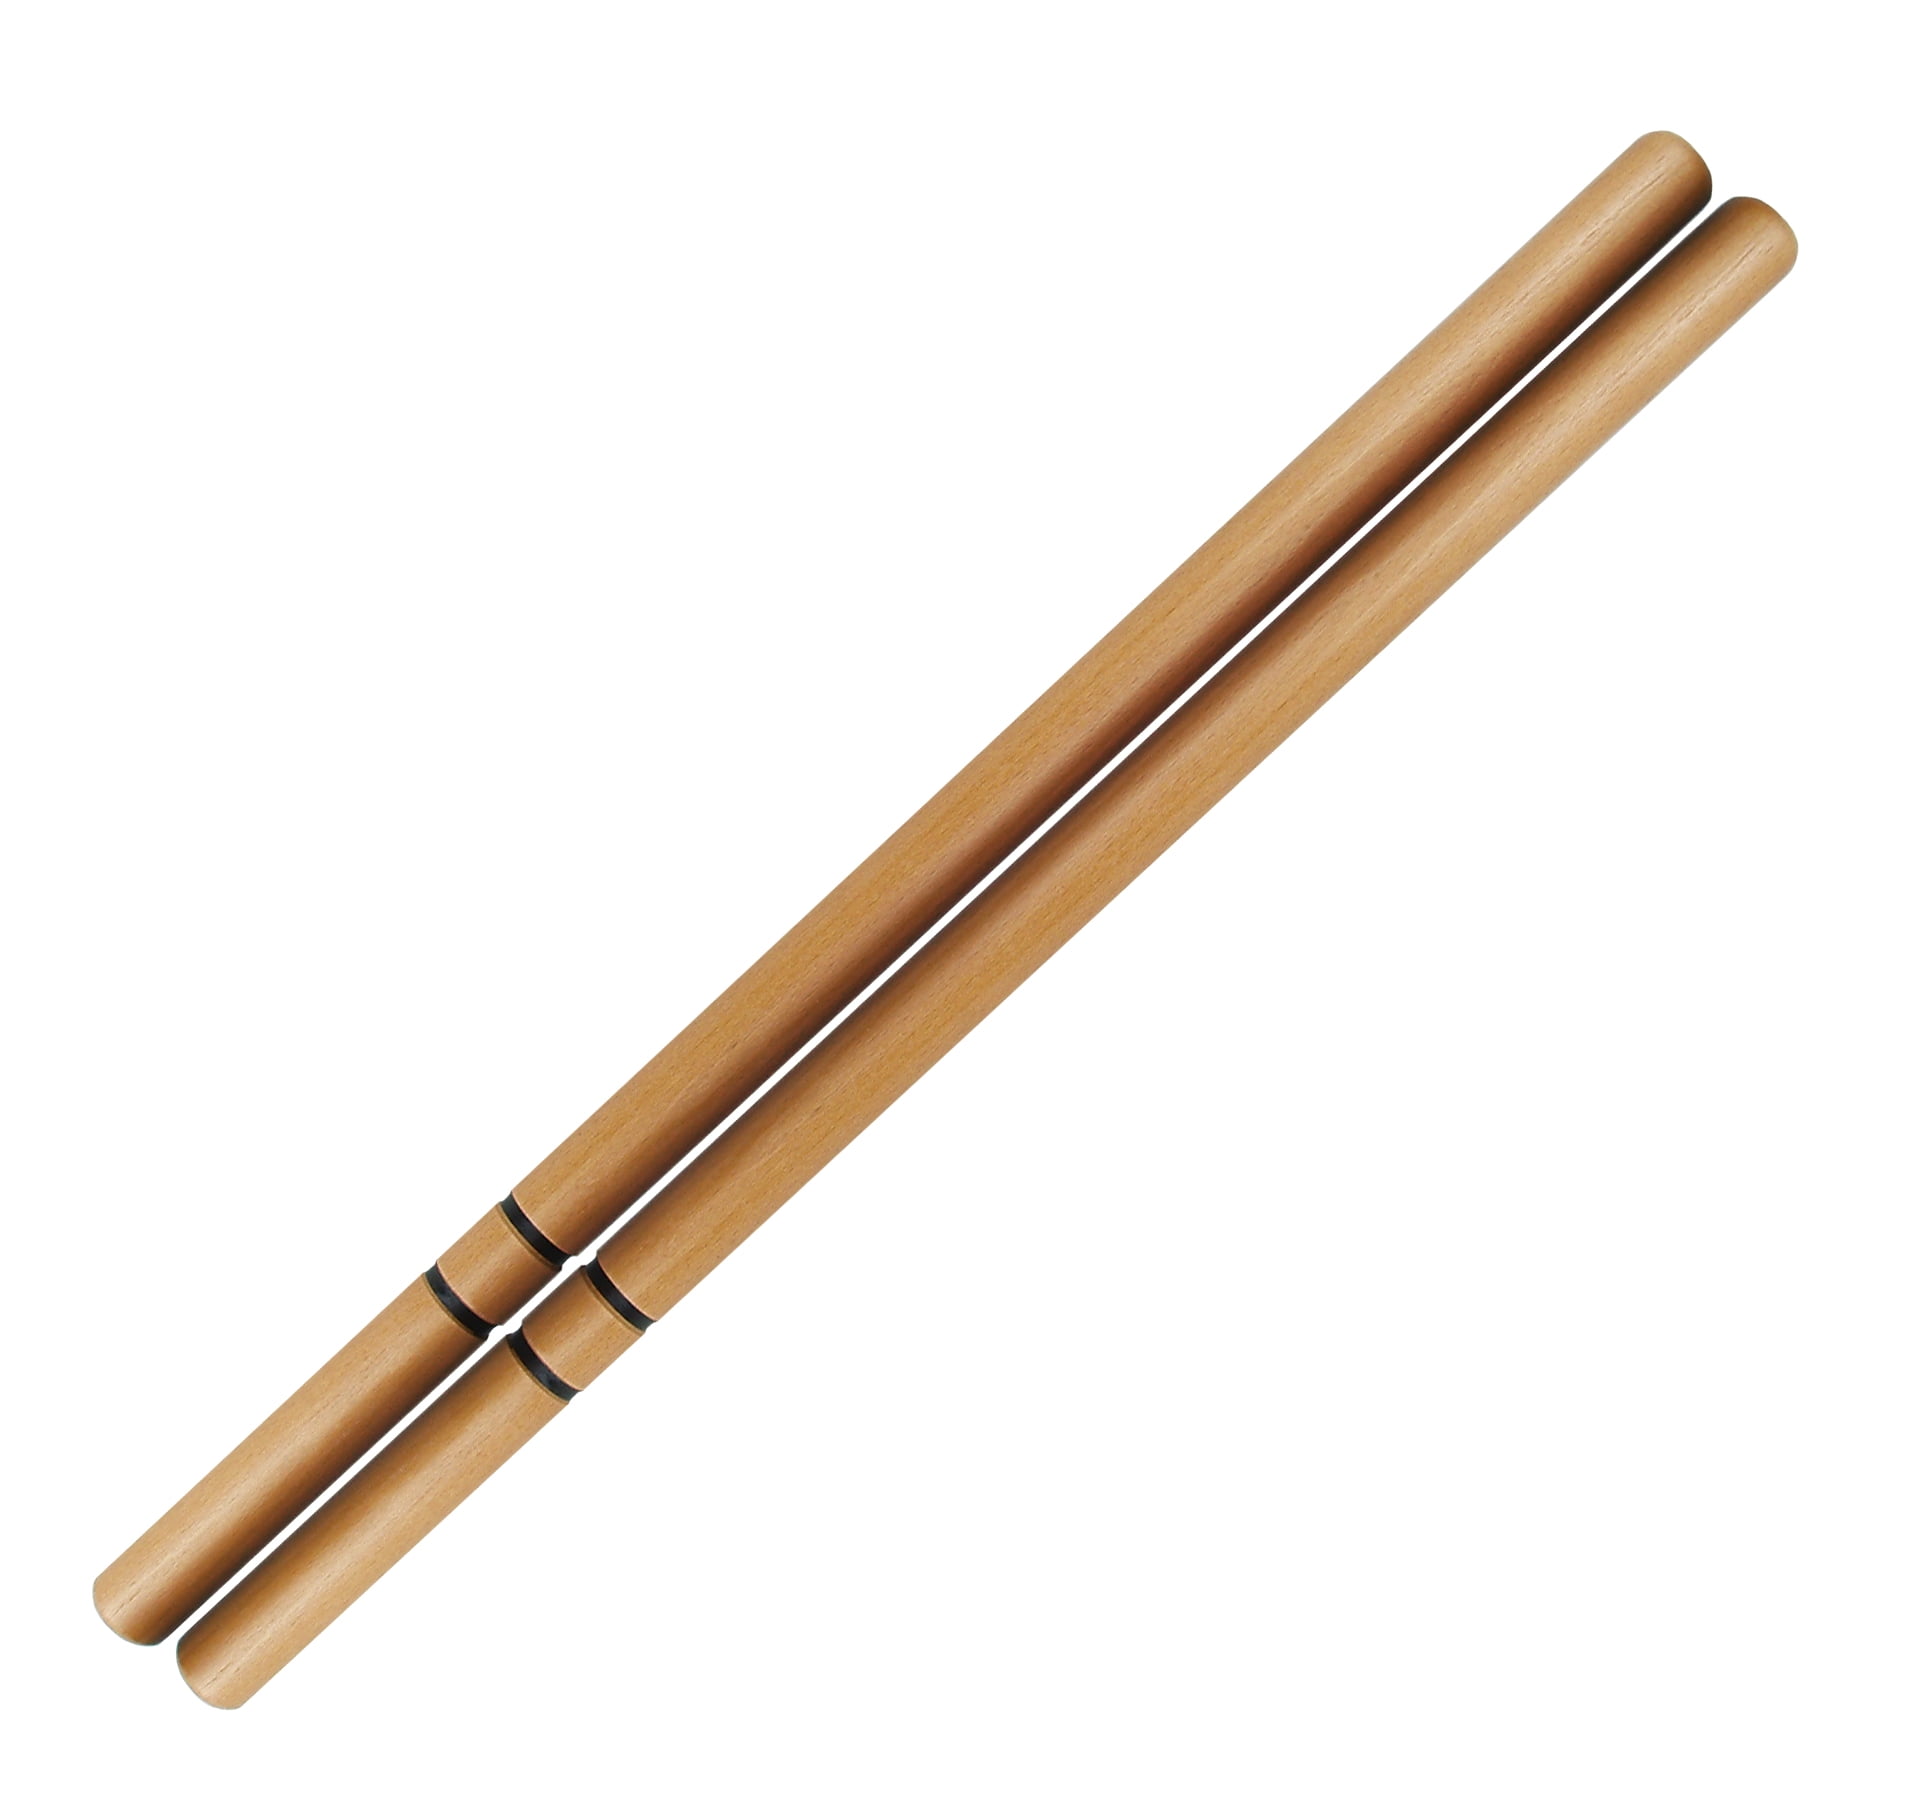 Hardwood Escrima Sticks Fighting wood Kali Arnis Martial Arts add Carrying Case 